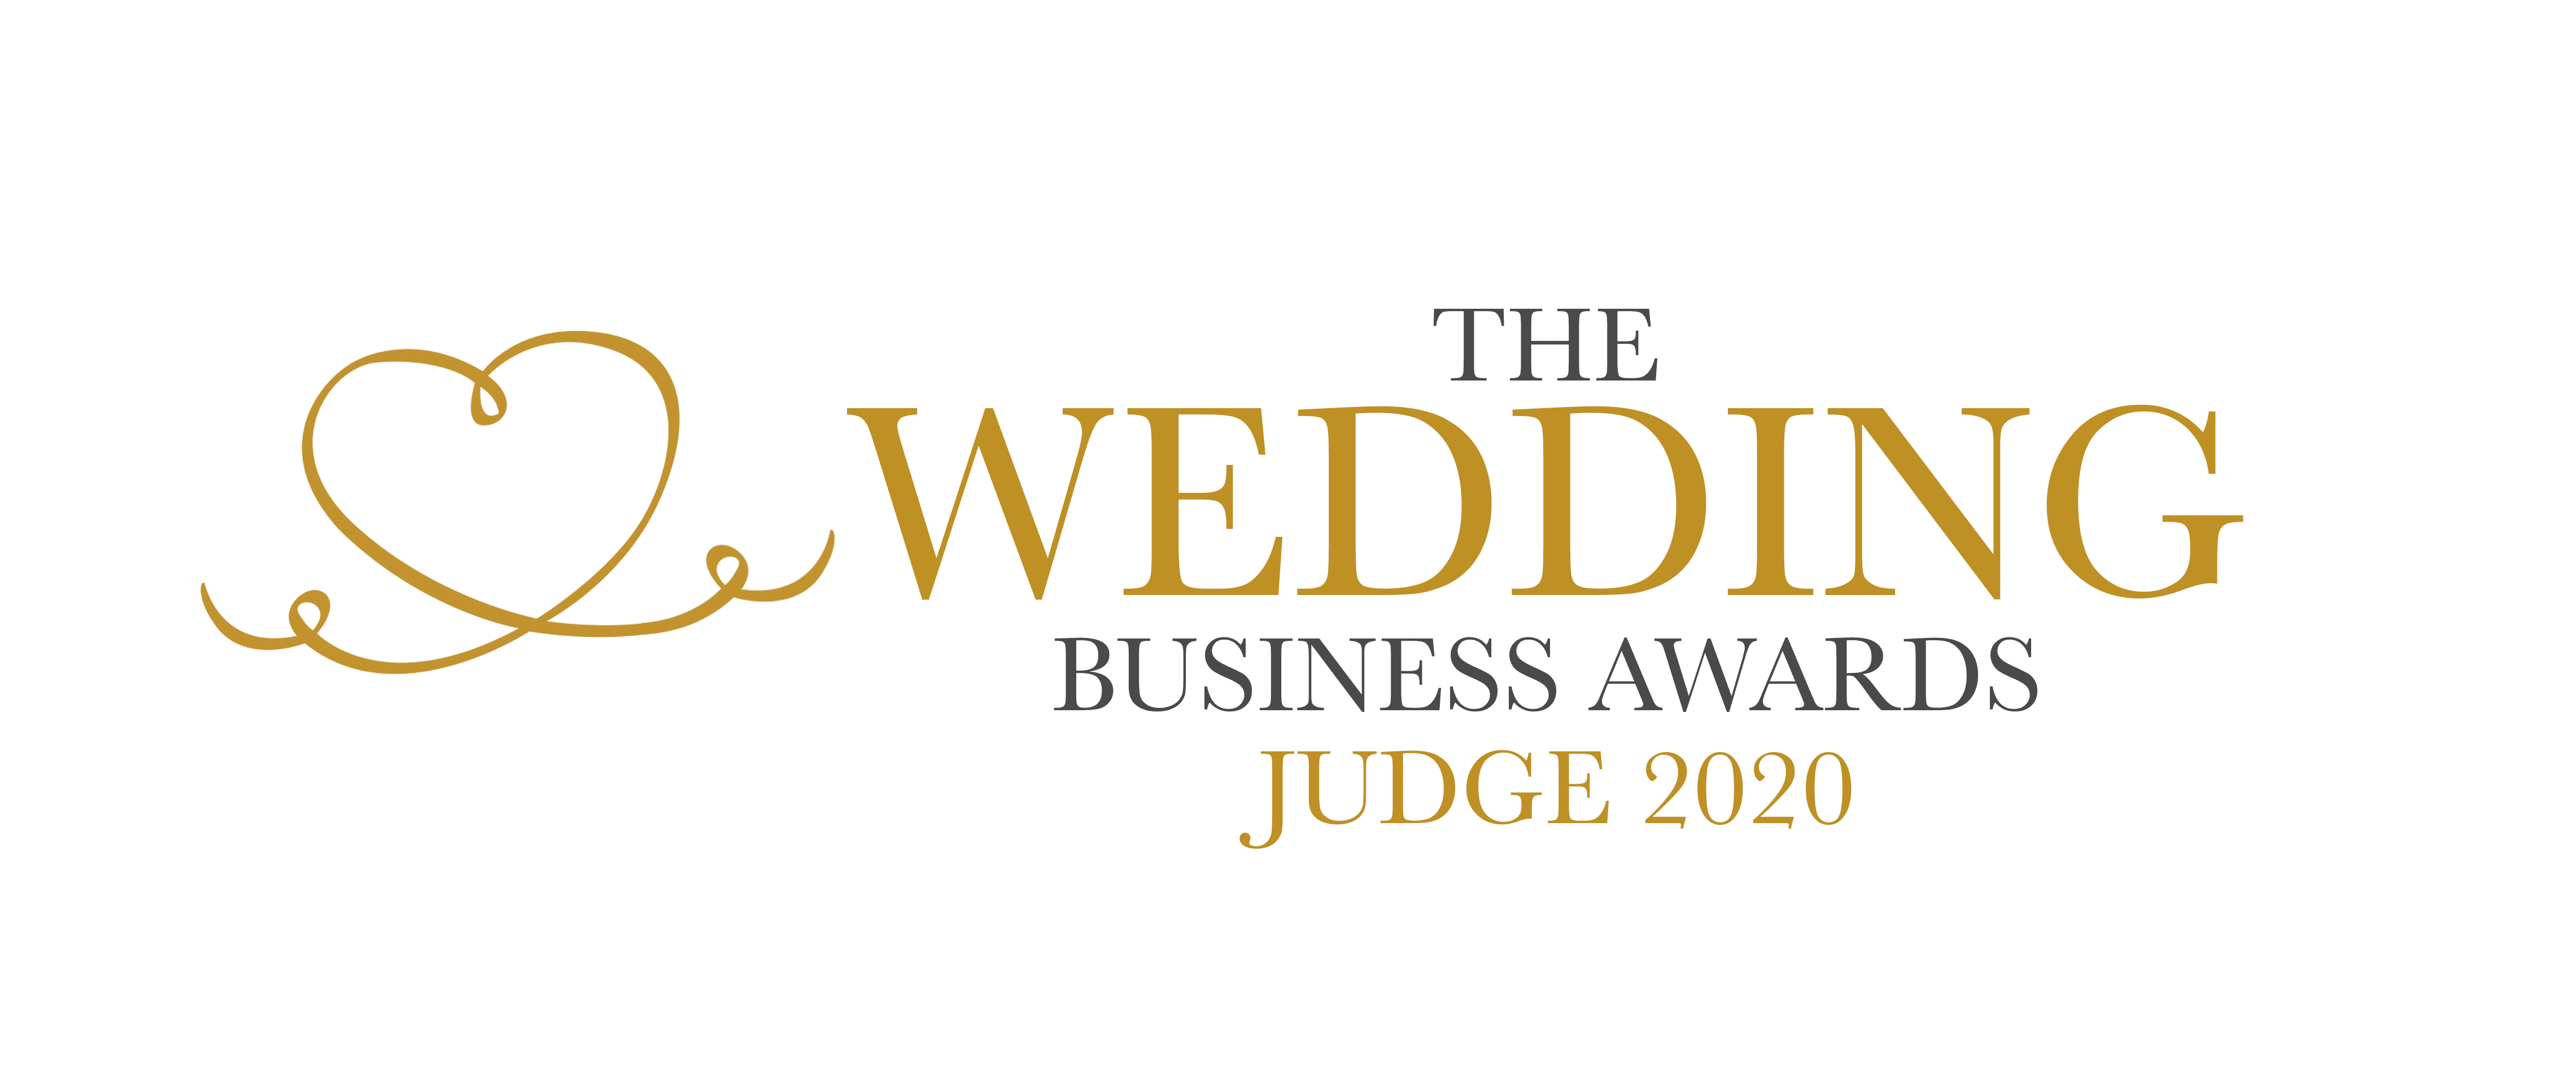 The Wedding Business Awards 2020